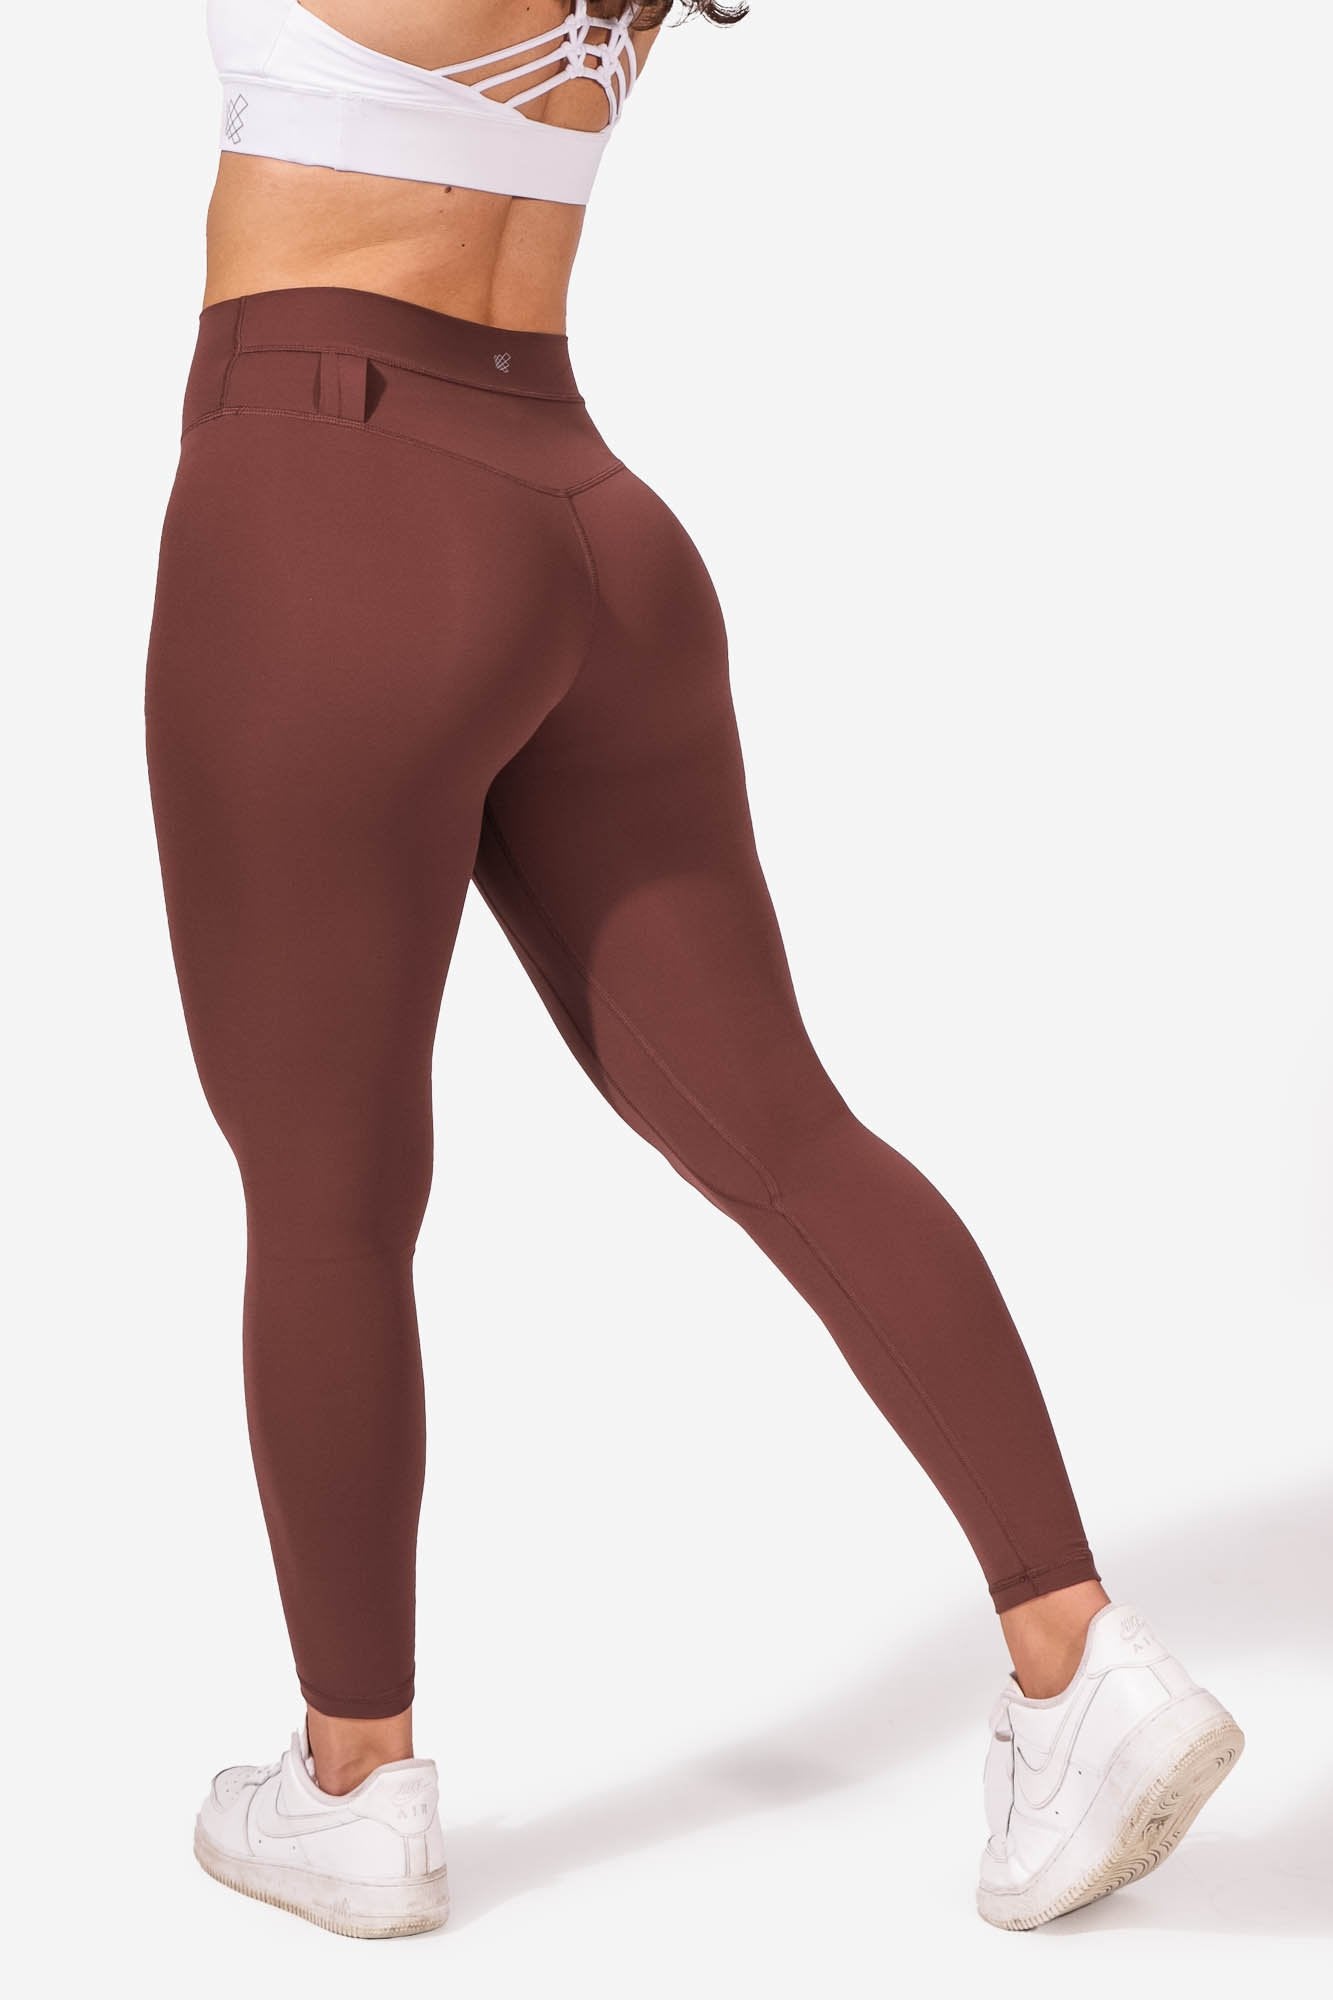 Women's High Waisted Yoga Leggings Workout Pants - Brown / S